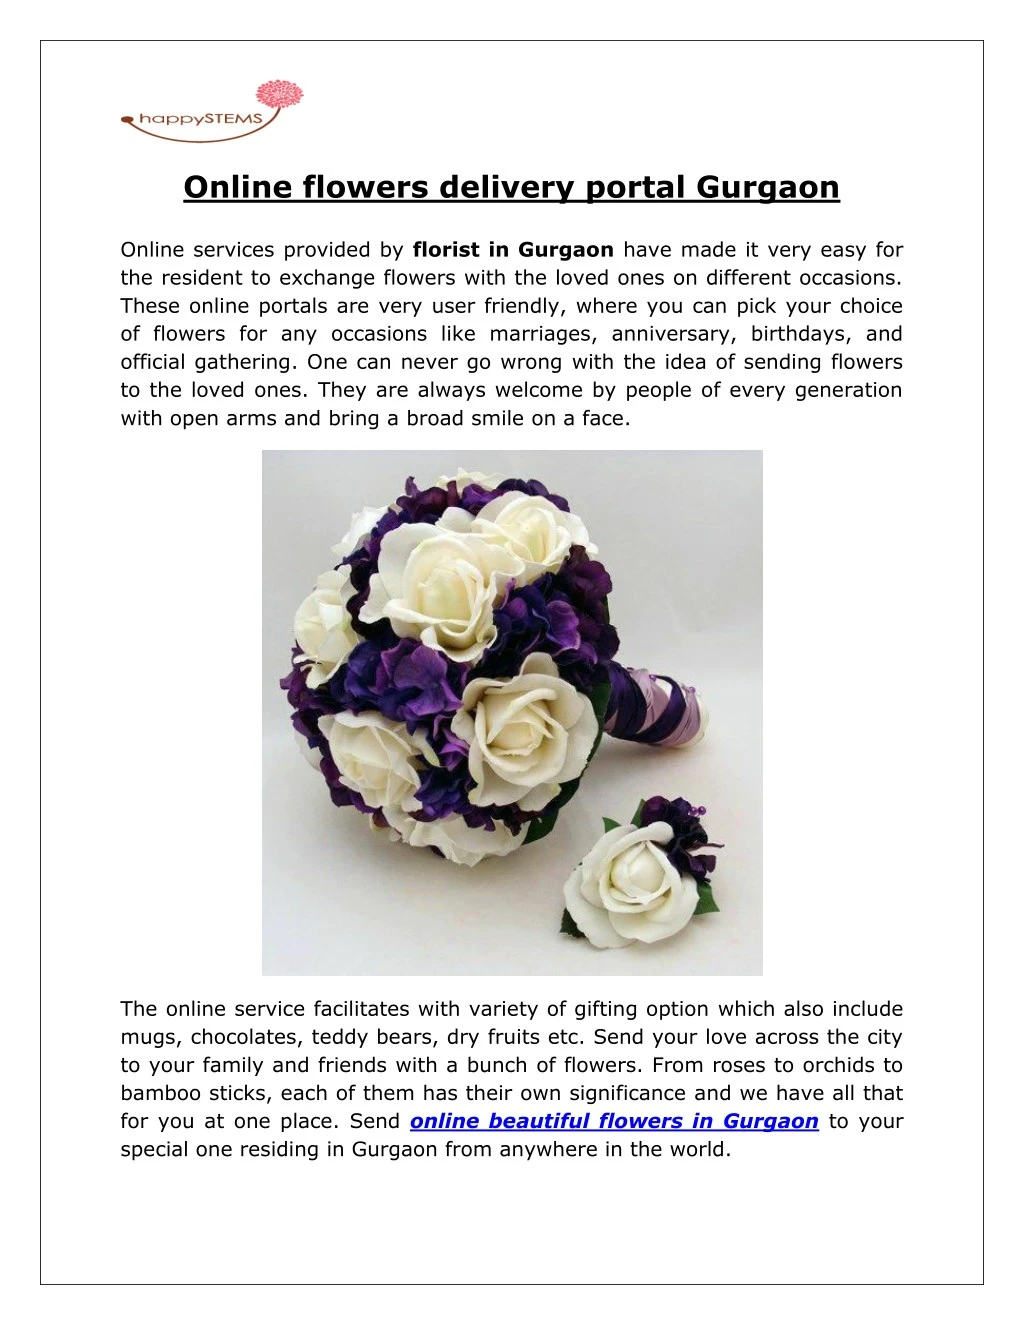 online flowers delivery portal gurgaon online